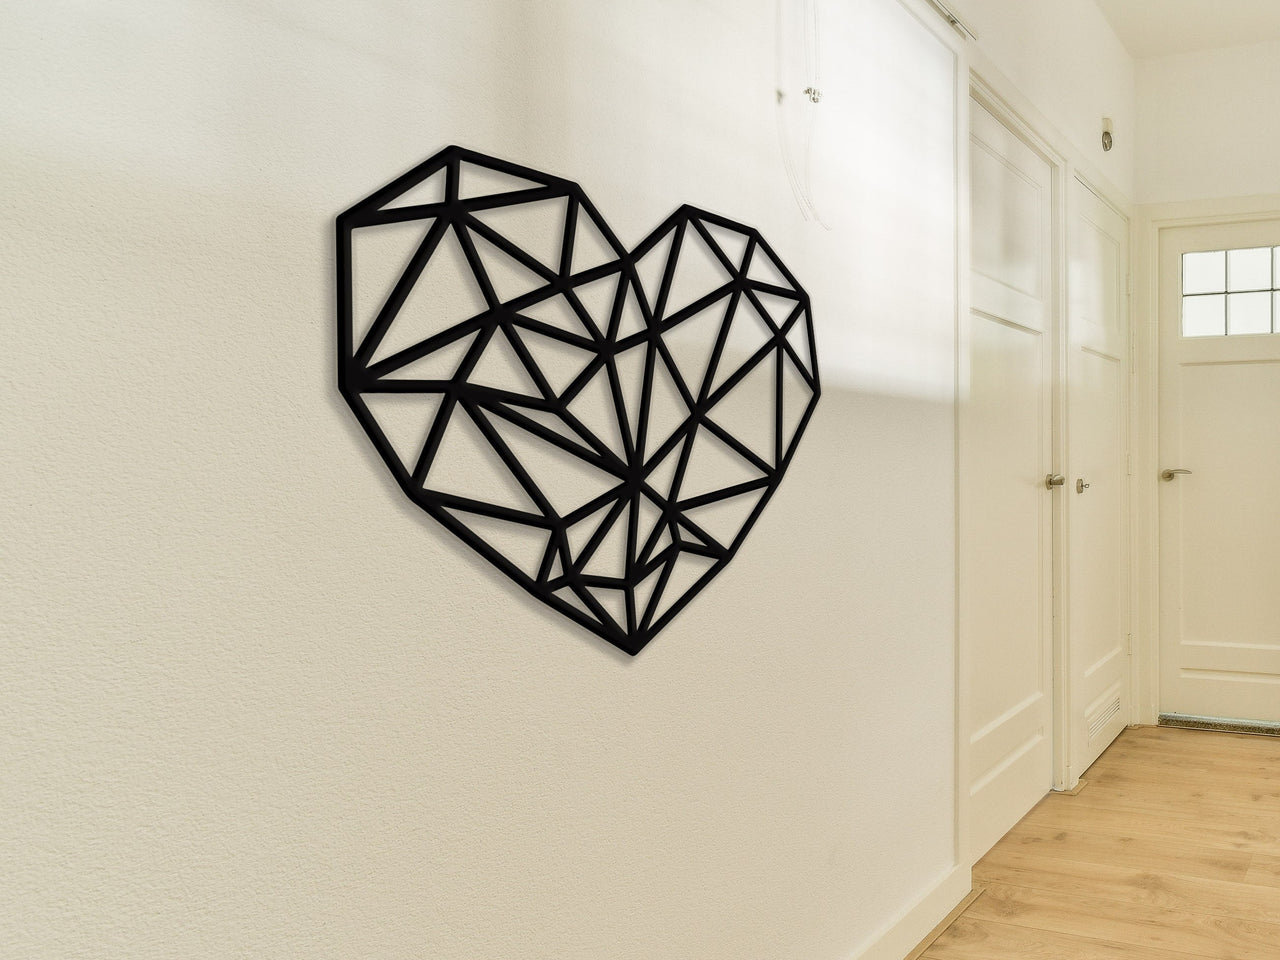 Heart Wall Decor - Heart Wall Art - Geometric Wall Art - Valentines Decor - Love Wall Art - Heart Sign Home Decor for Bedroom